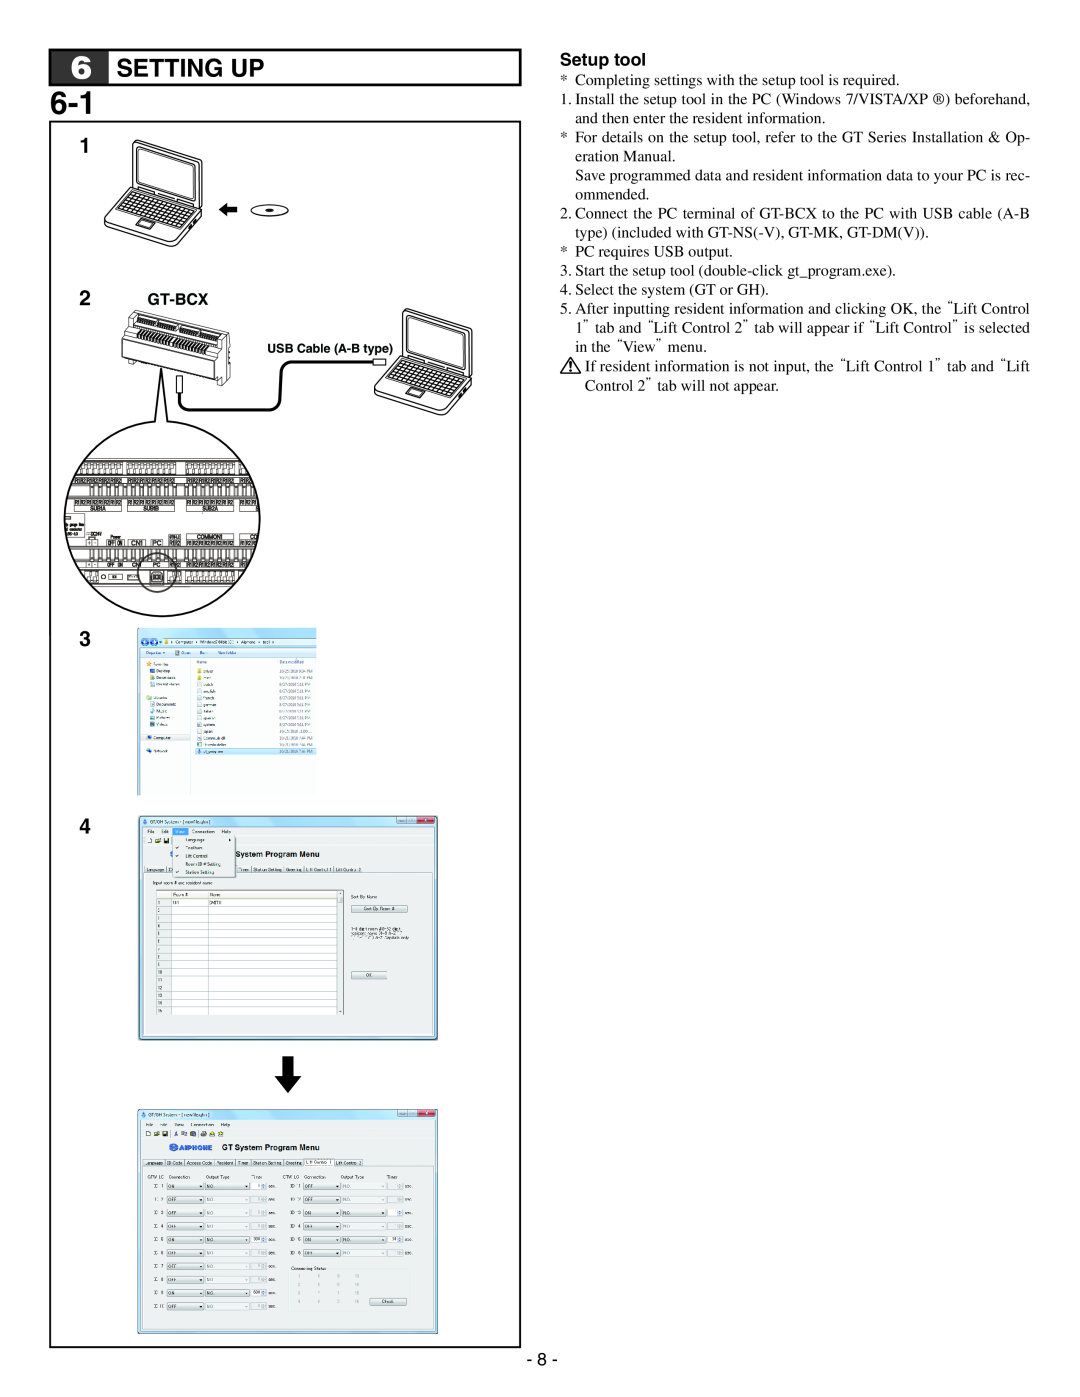 Aiphone GTW-LC service manual Setting Up, Setup tool, Gt-Bcx 